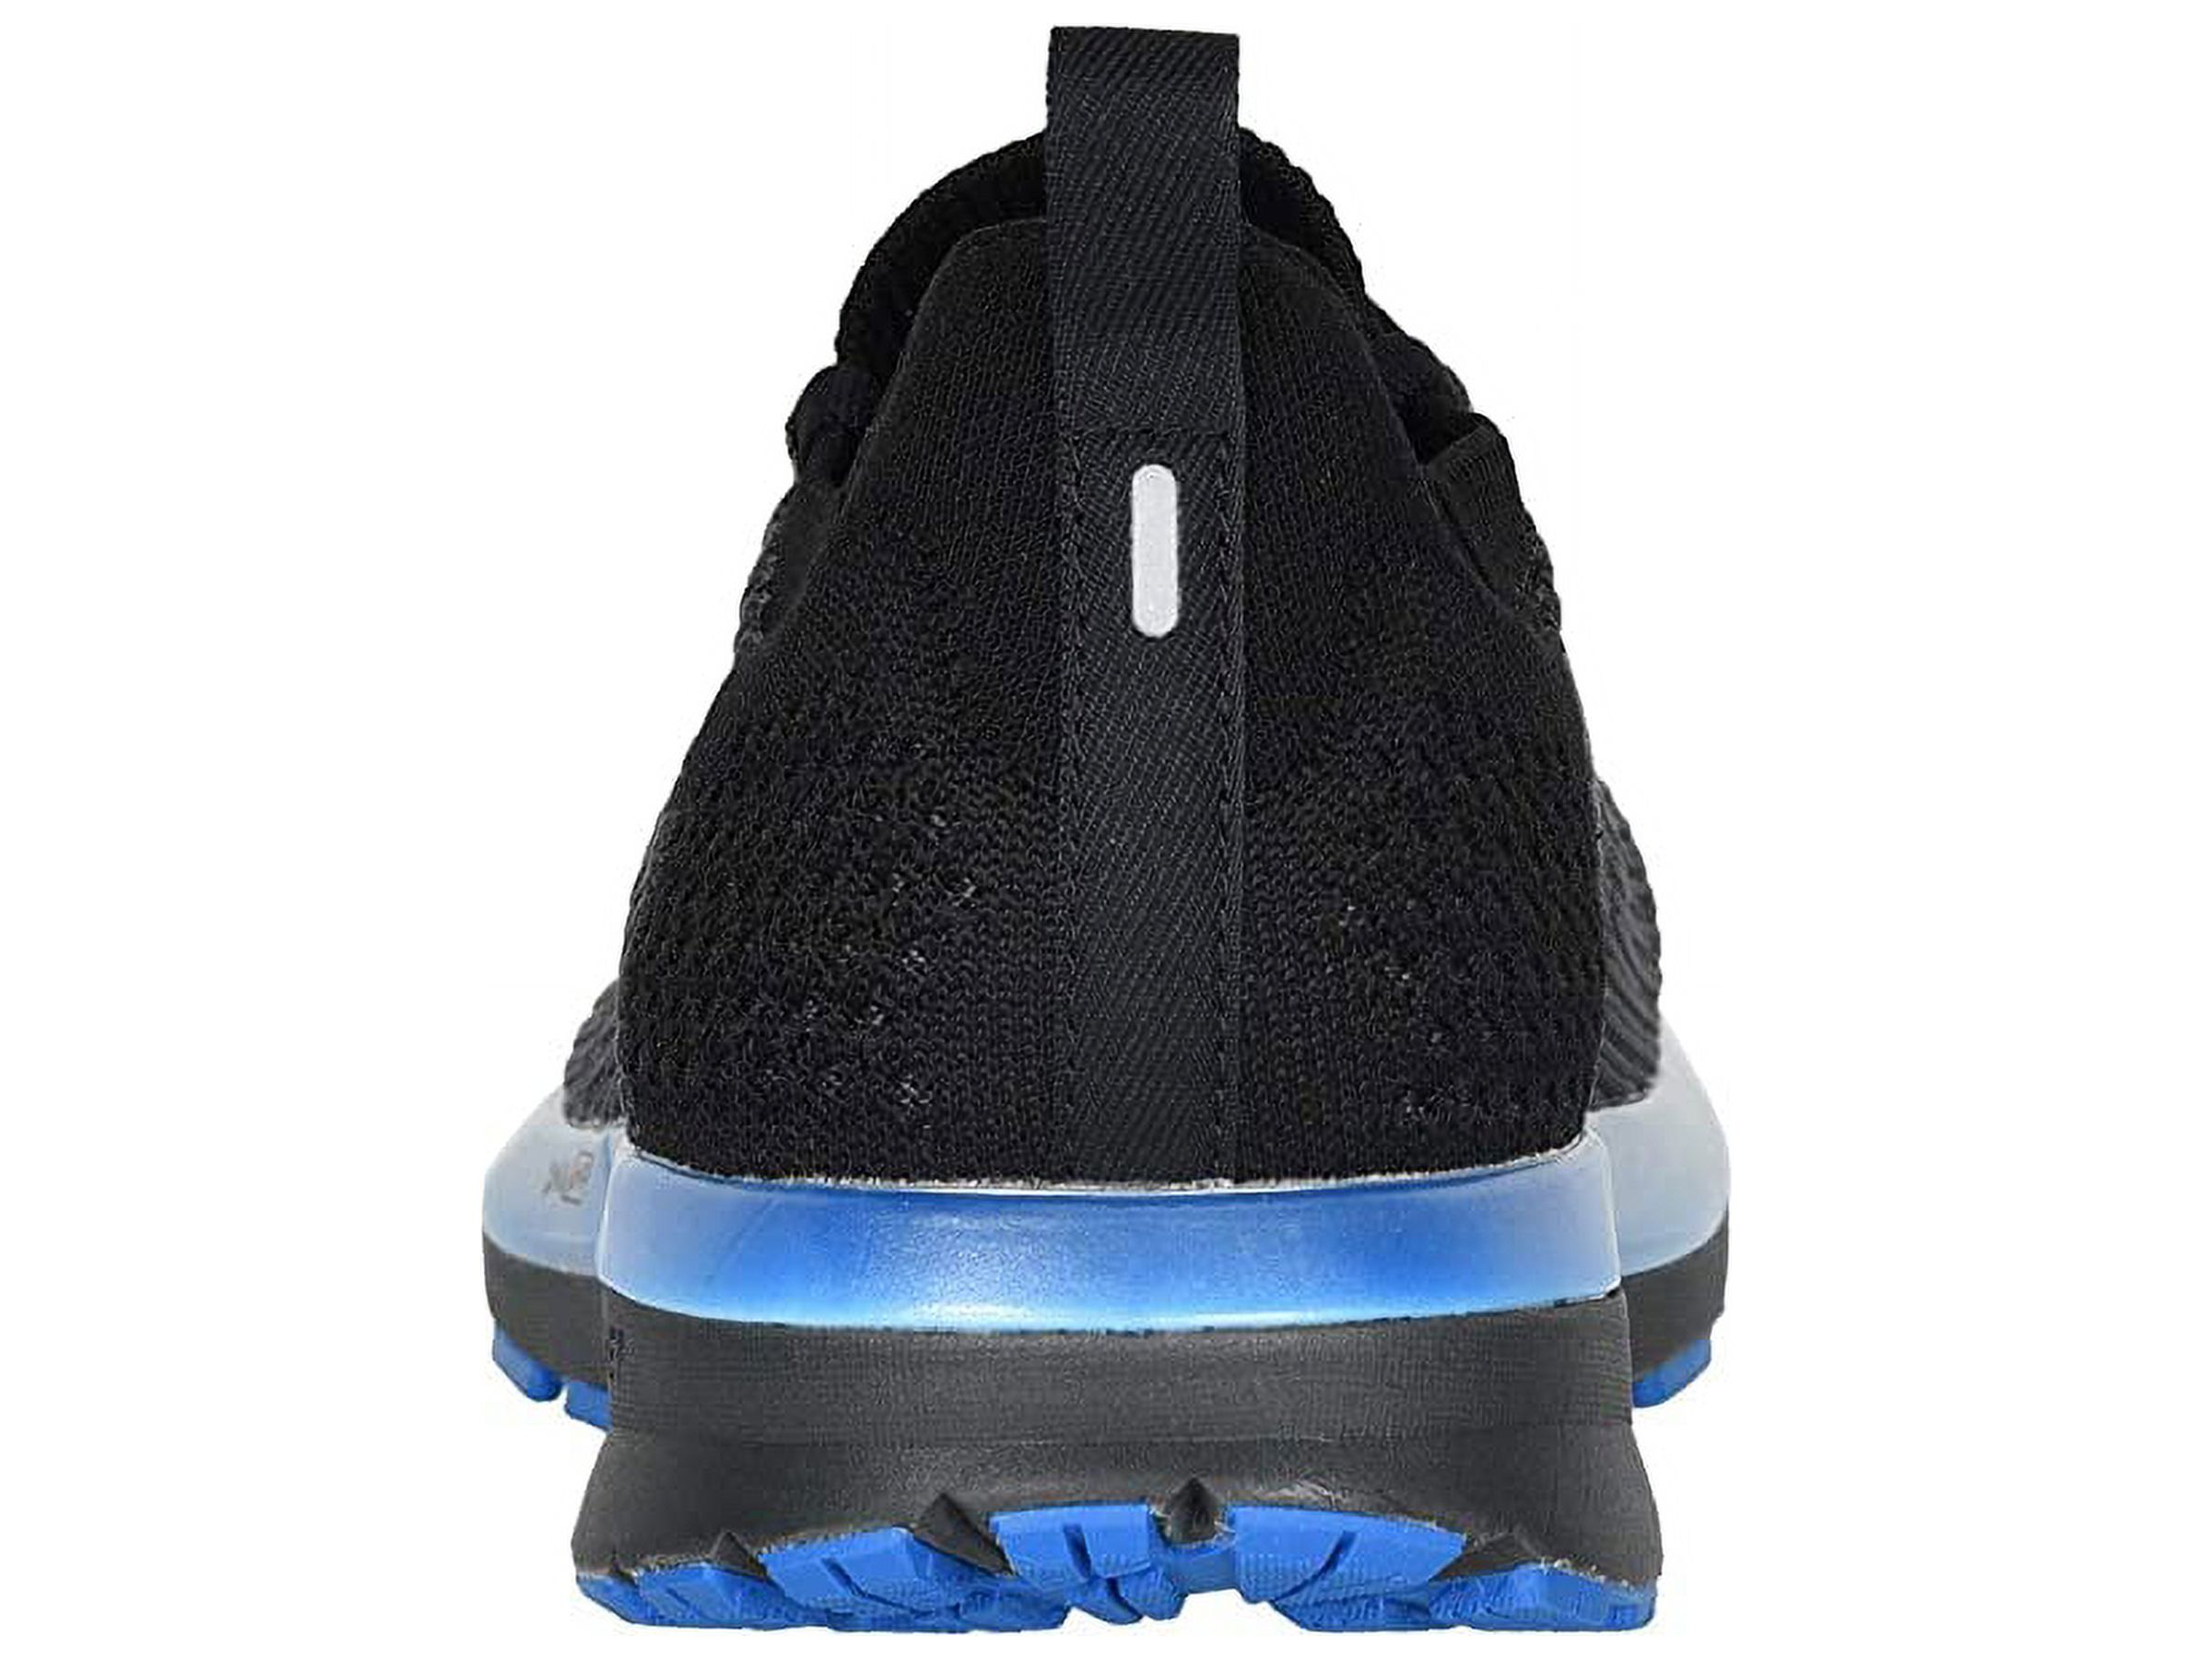 Brooks Men's Ricochet 2 Running Shoe, Black/Multi, 9.5 D(M) US - image 5 of 6